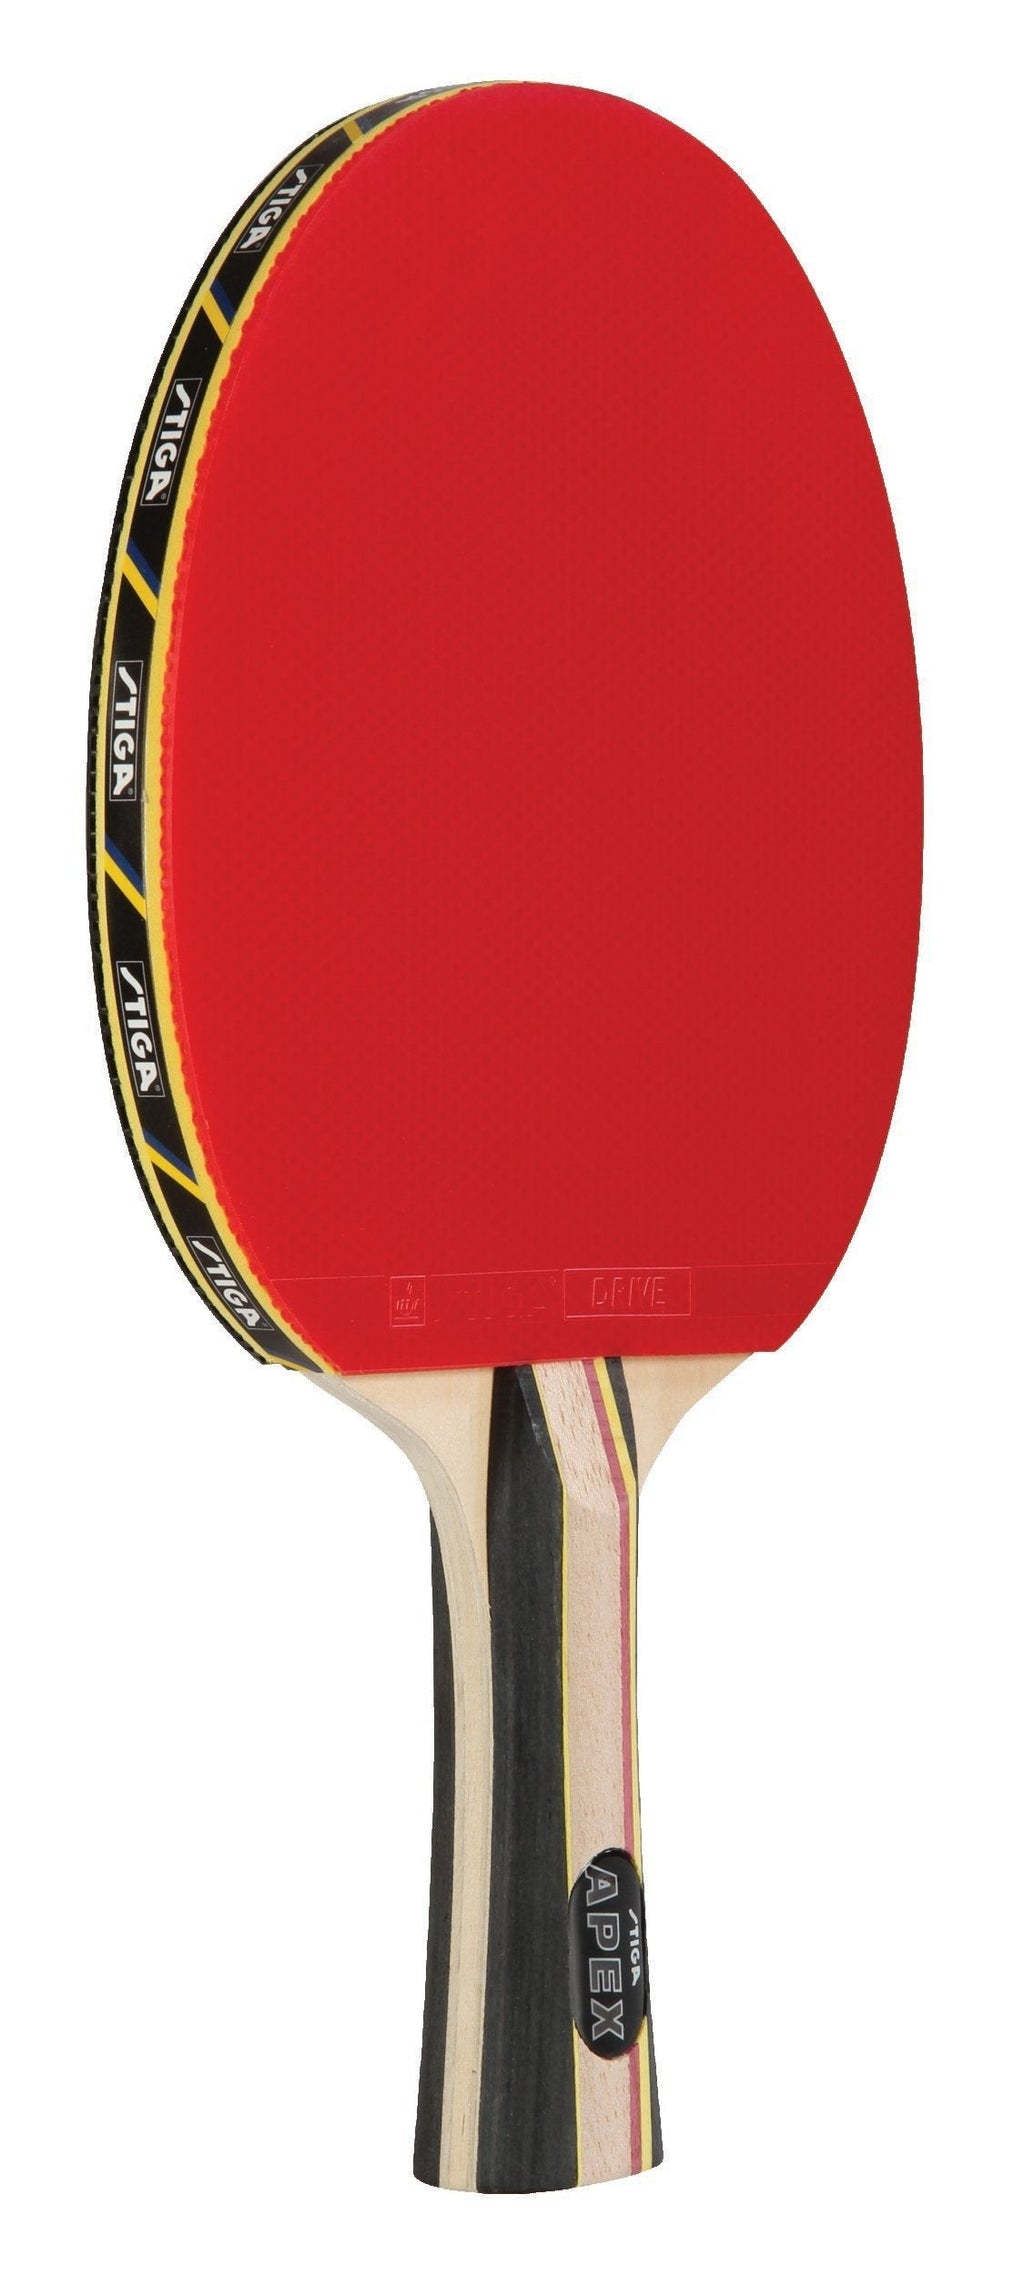 [AUSTRALIA] - STIGA Apex Performance-Level Table Tennis Racket with ACS Technology for Increased Control Оne Расk 